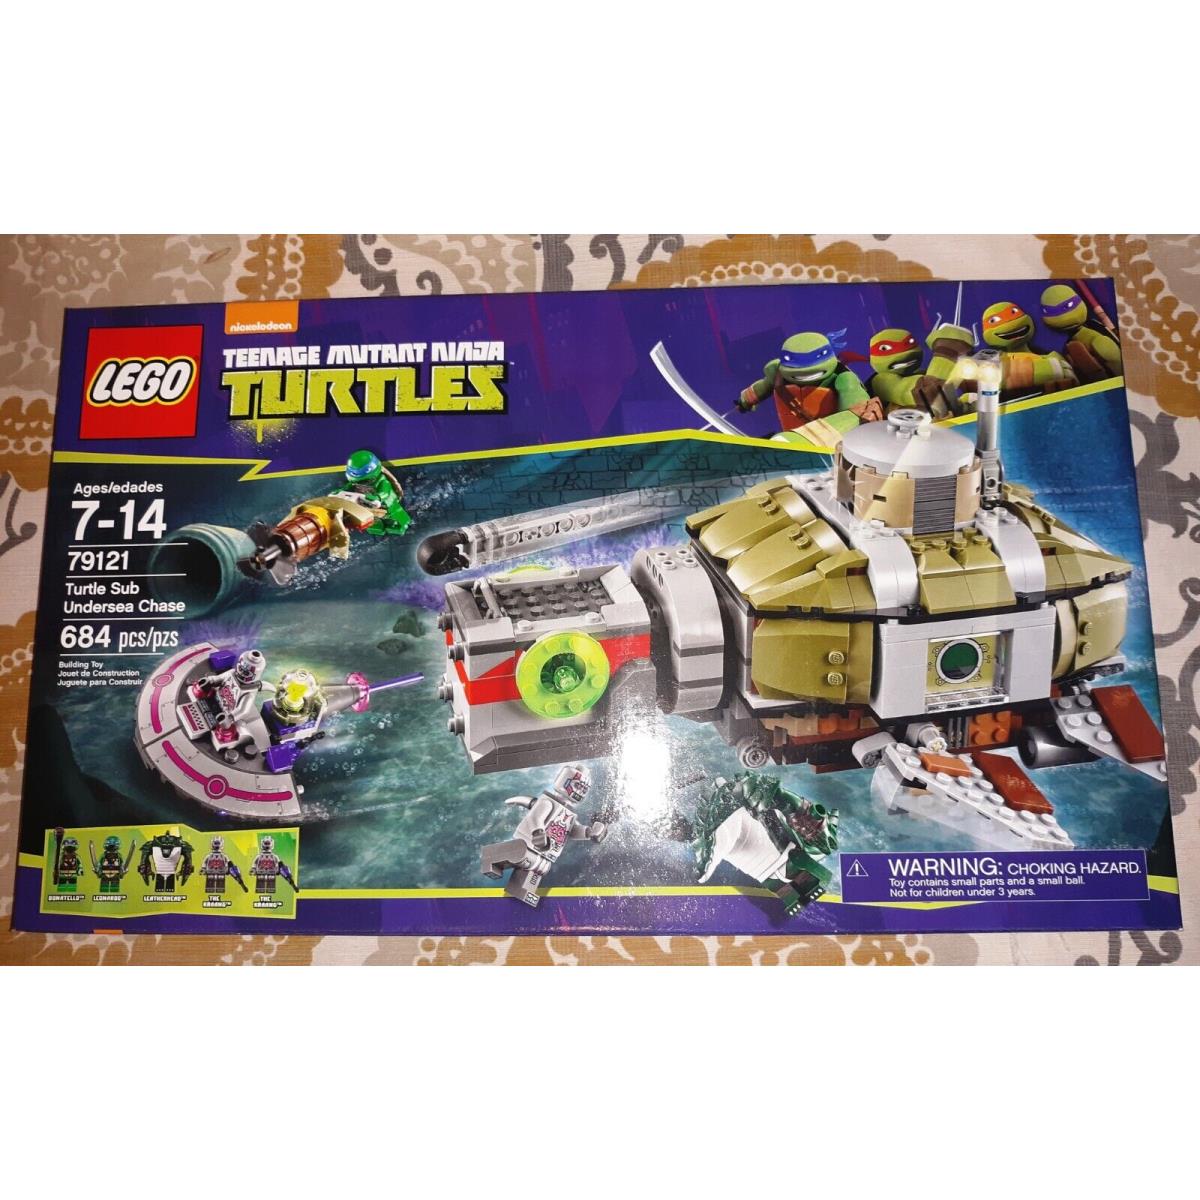 Lego 79121 Tmnt Turtle Sub Undersea Chase 684pcs Retired